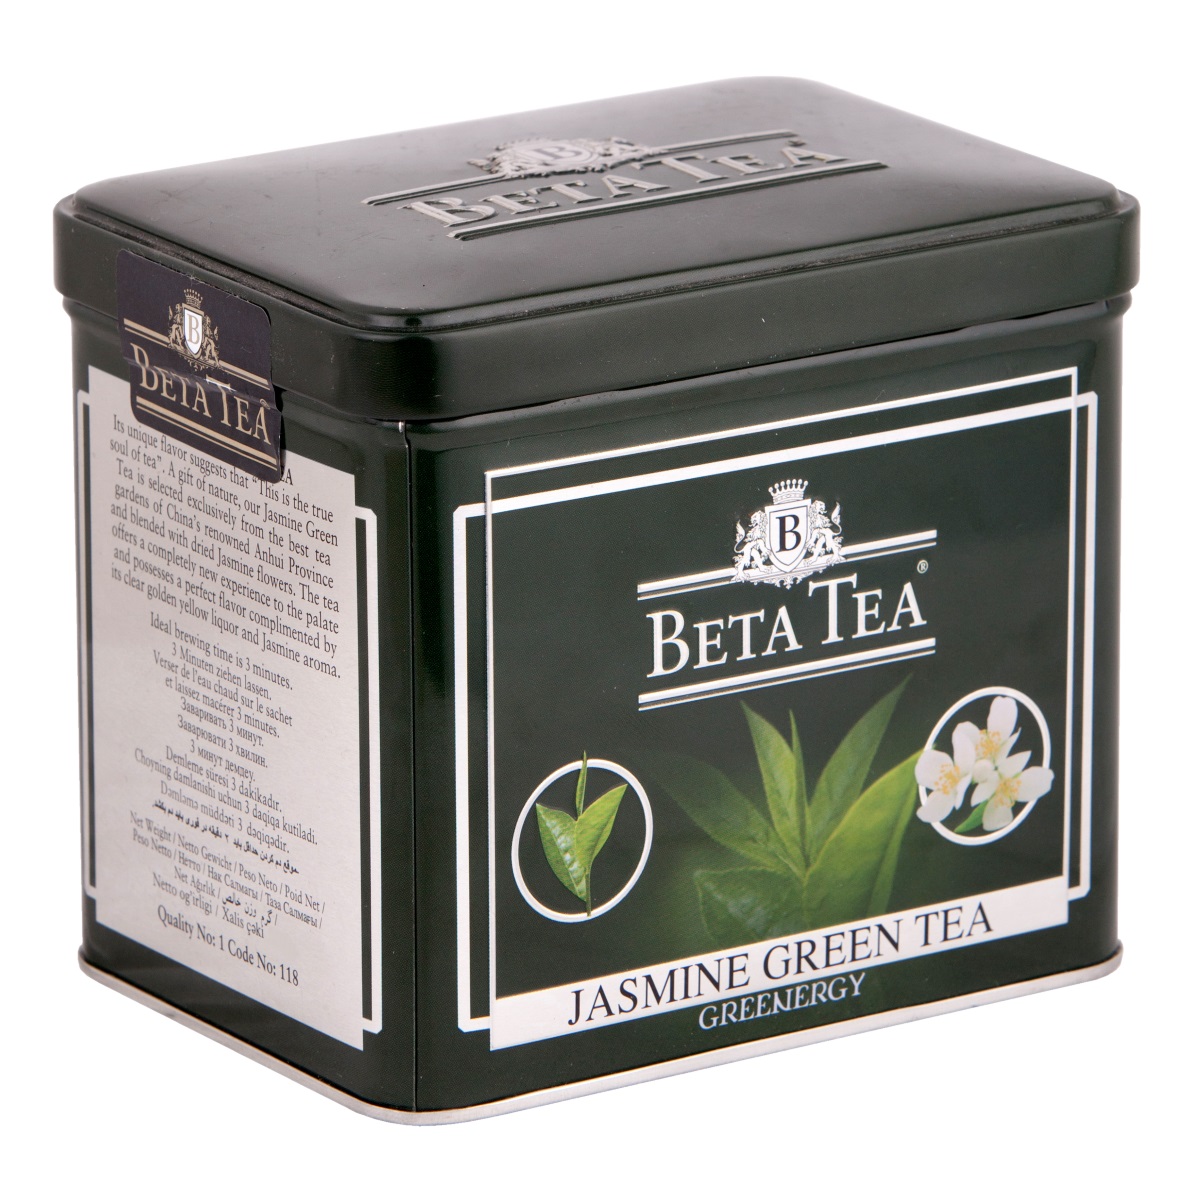 Beta Tea     , 100 